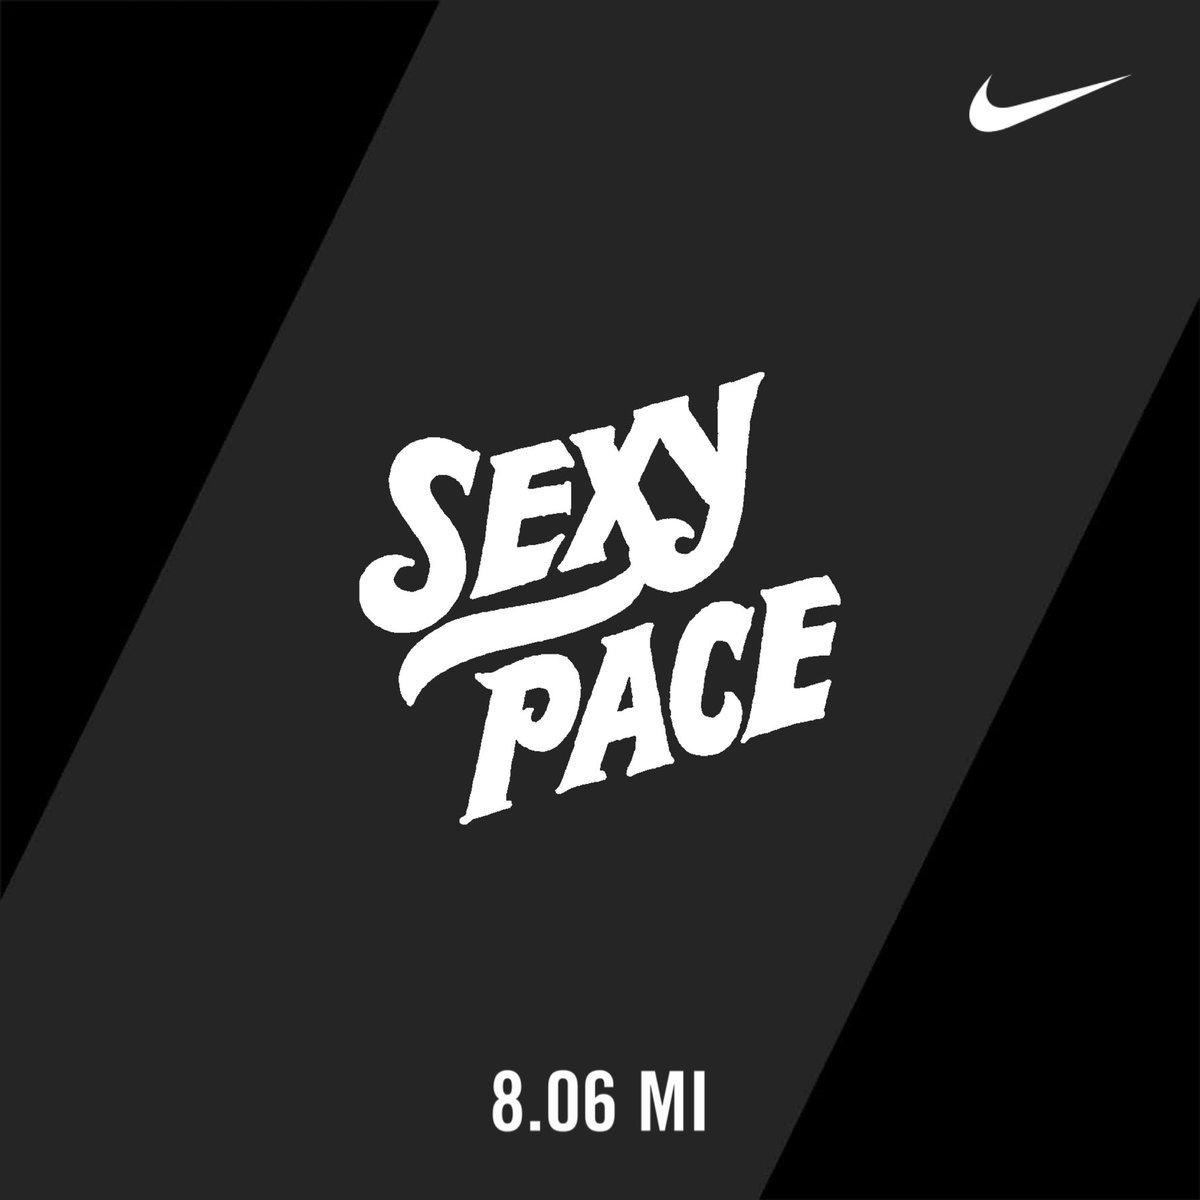 Ran 8.06 miles with Nike⁠ Run Club. 

Fresh legs 🦵 🏁 #nikerunning